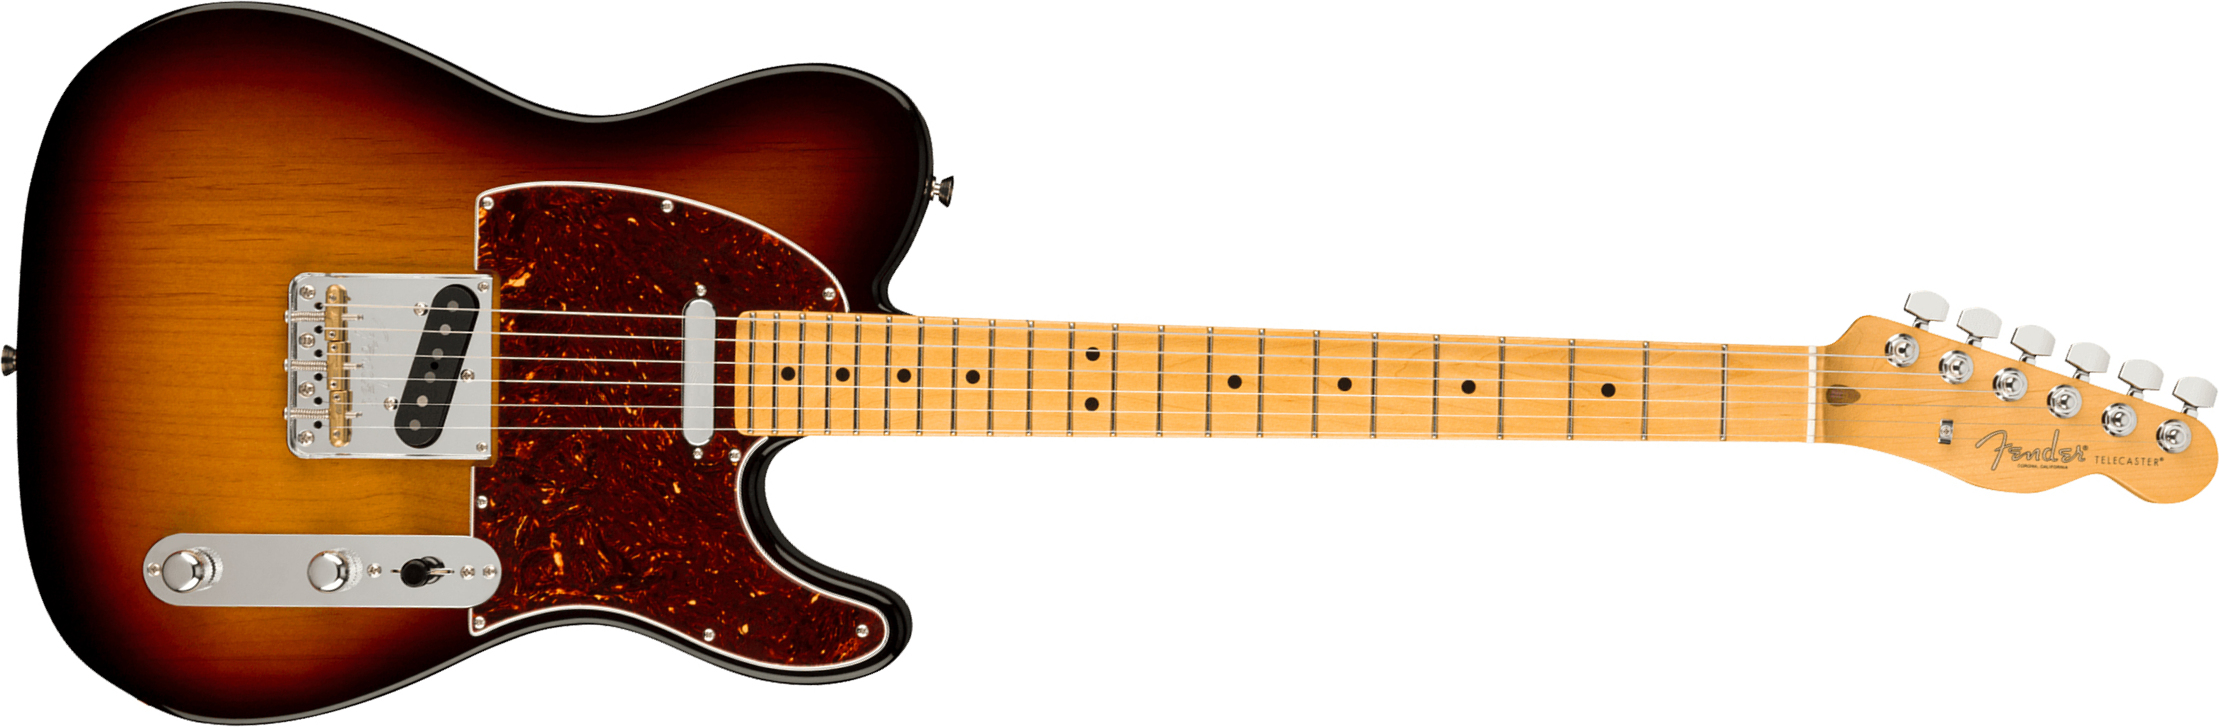 Fender Tele American Professional Ii Usa Mn - 3-color Sunburst - Televorm elektrische gitaar - Main picture